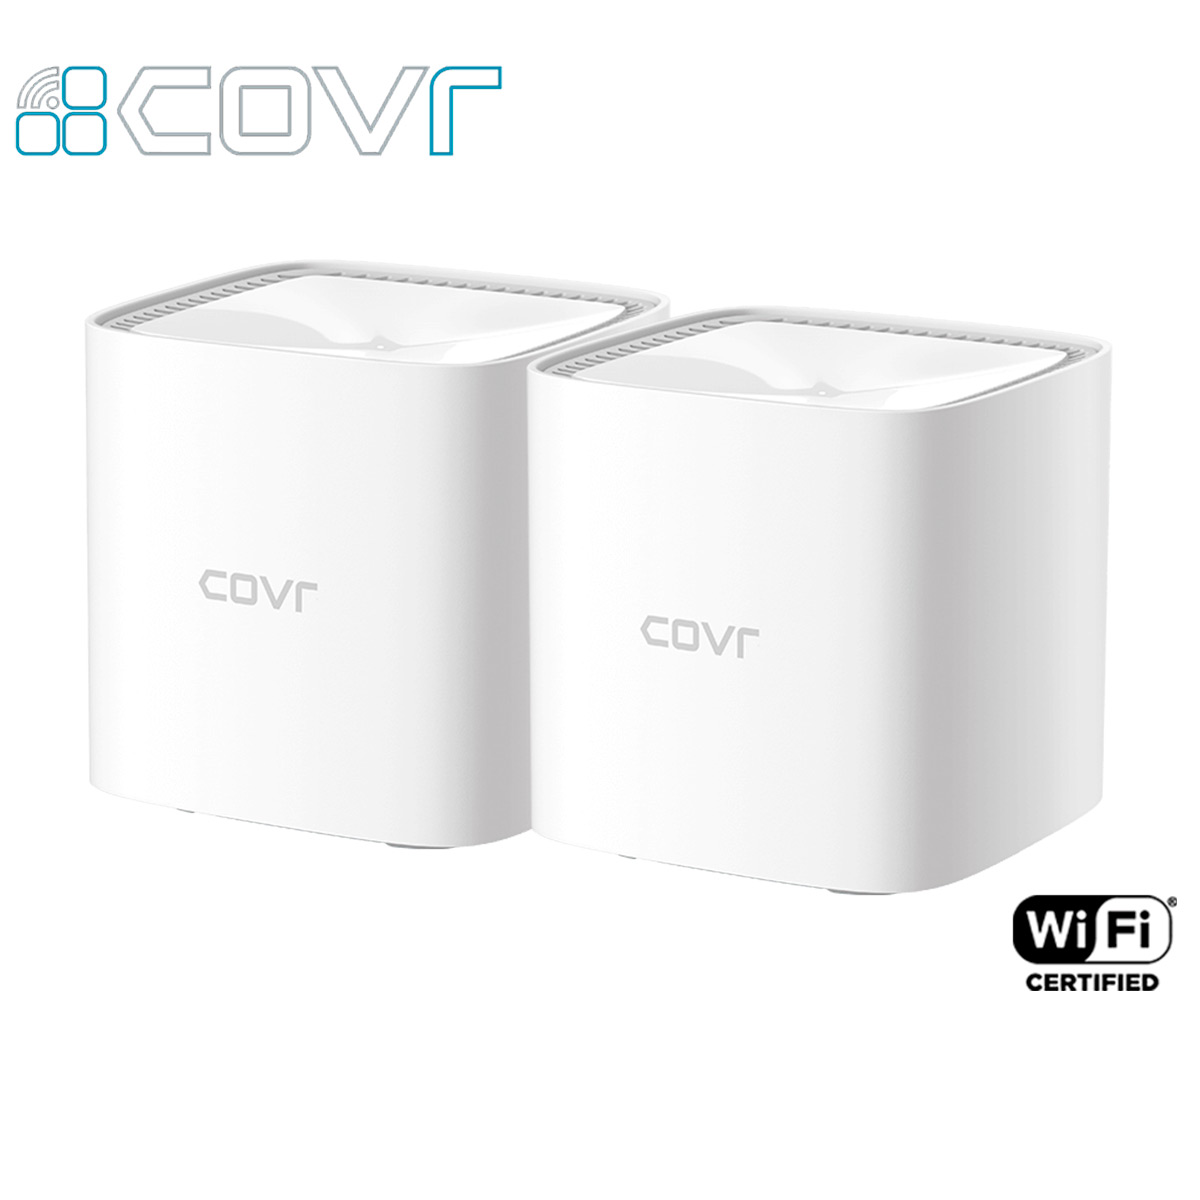 Roteador WI-Fi D-Link COVR-1102 AC1200 - Combo 2 unidades - Gigabit - Tecnologia Wi-Fi Easy MESH - Tecnologia Wave 2 e MU-MIMO - Dual Band 2.4 GHz e 5 GHz